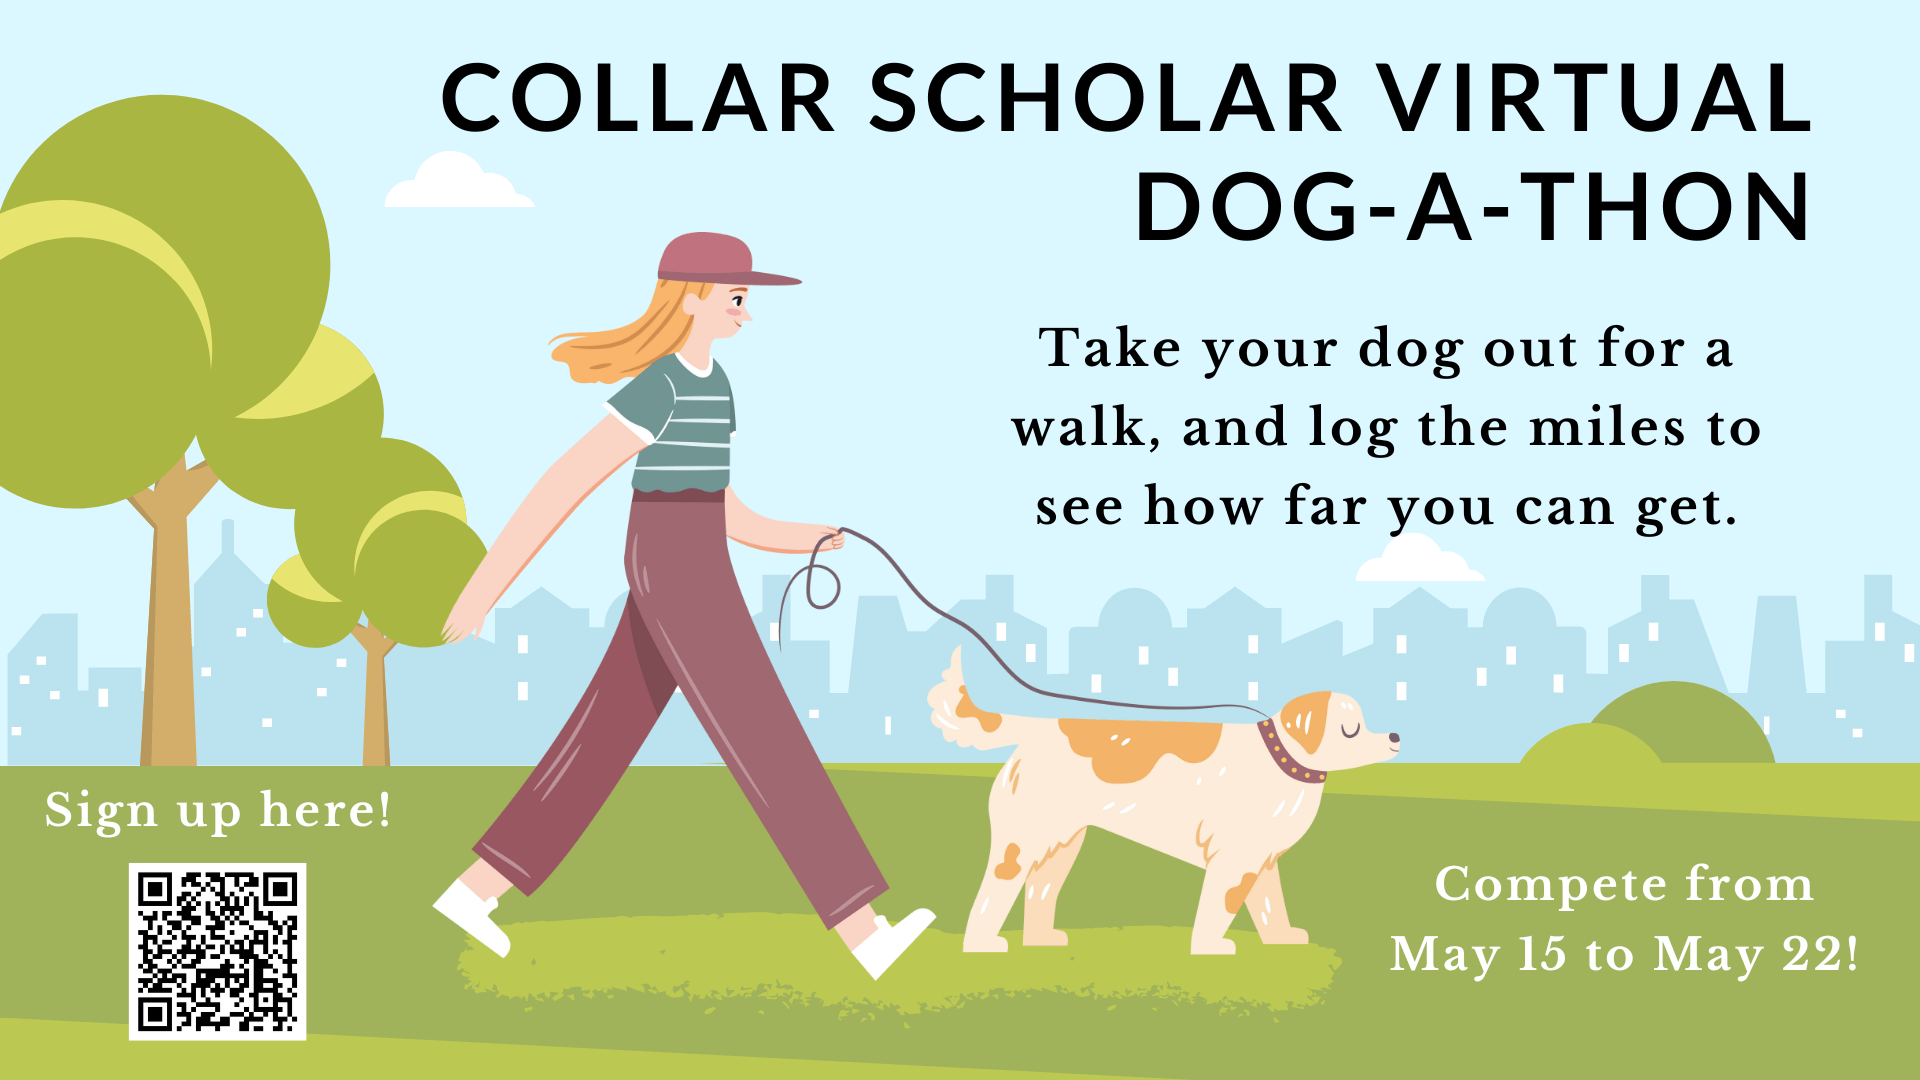 Collar Scholar Dog-a-thon